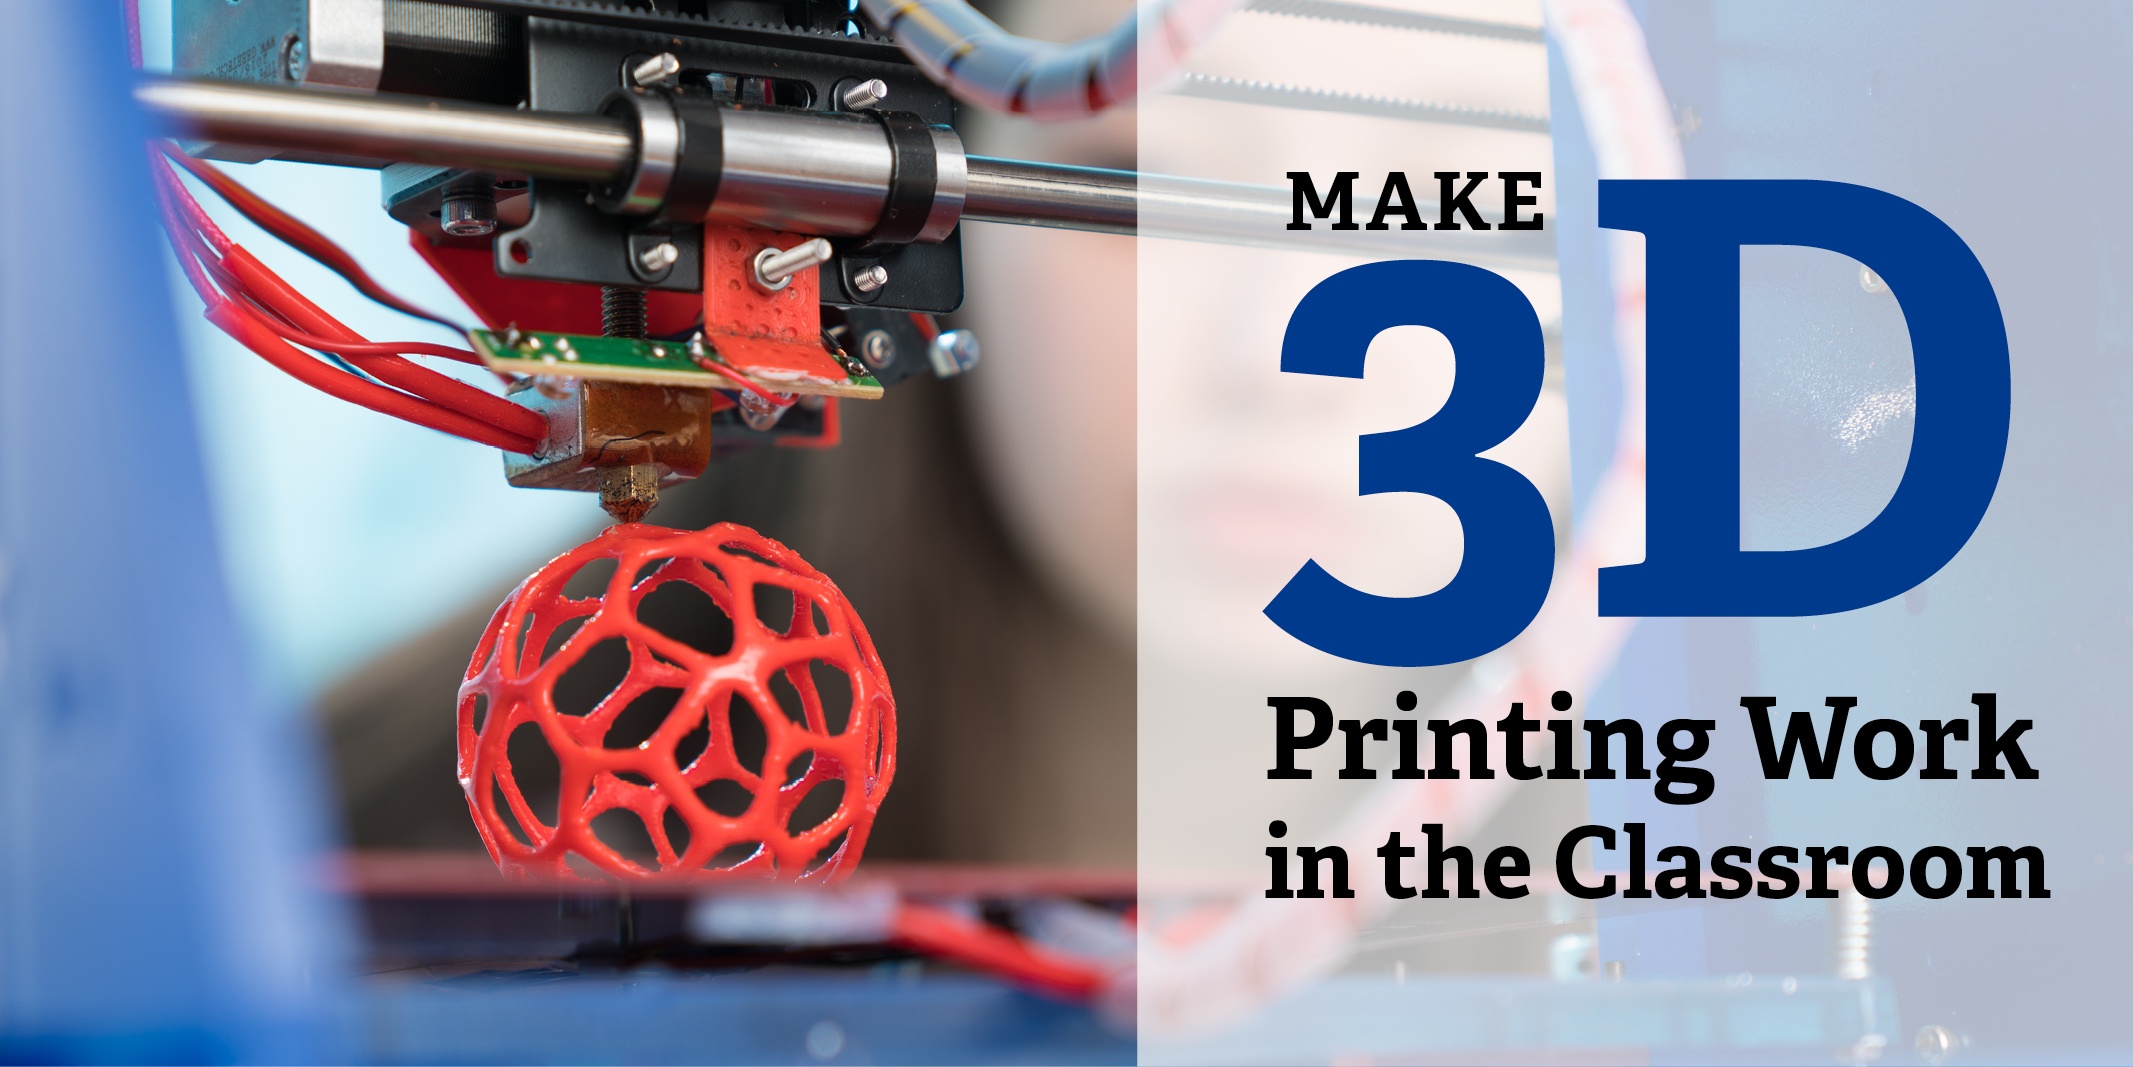 Make 3D Printing Work